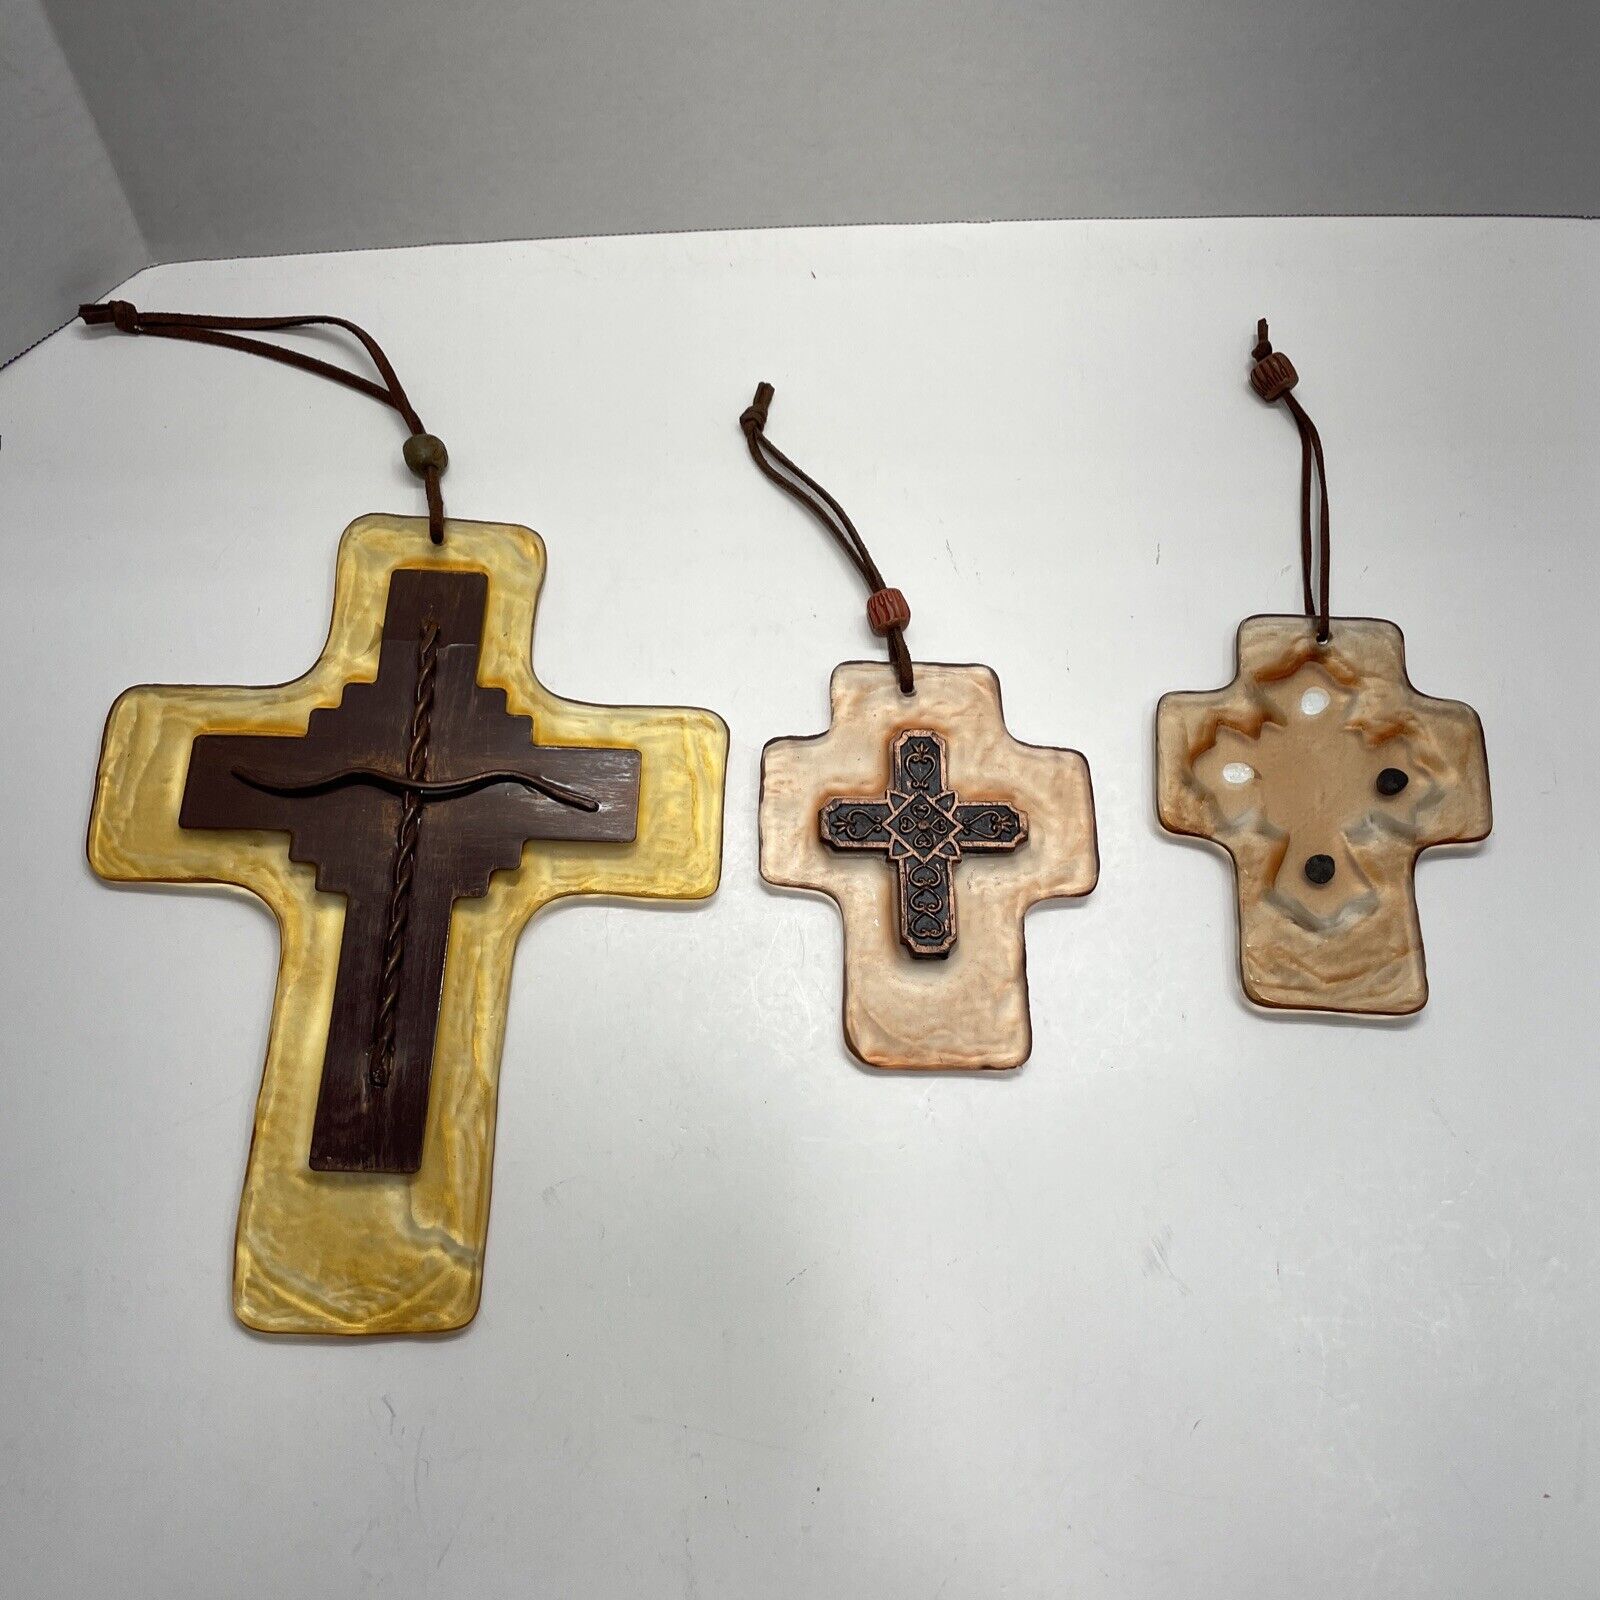 Lot of 3 Christian Cross Suncatcher - Fused Glass w/Metal Insert & Clay Beads